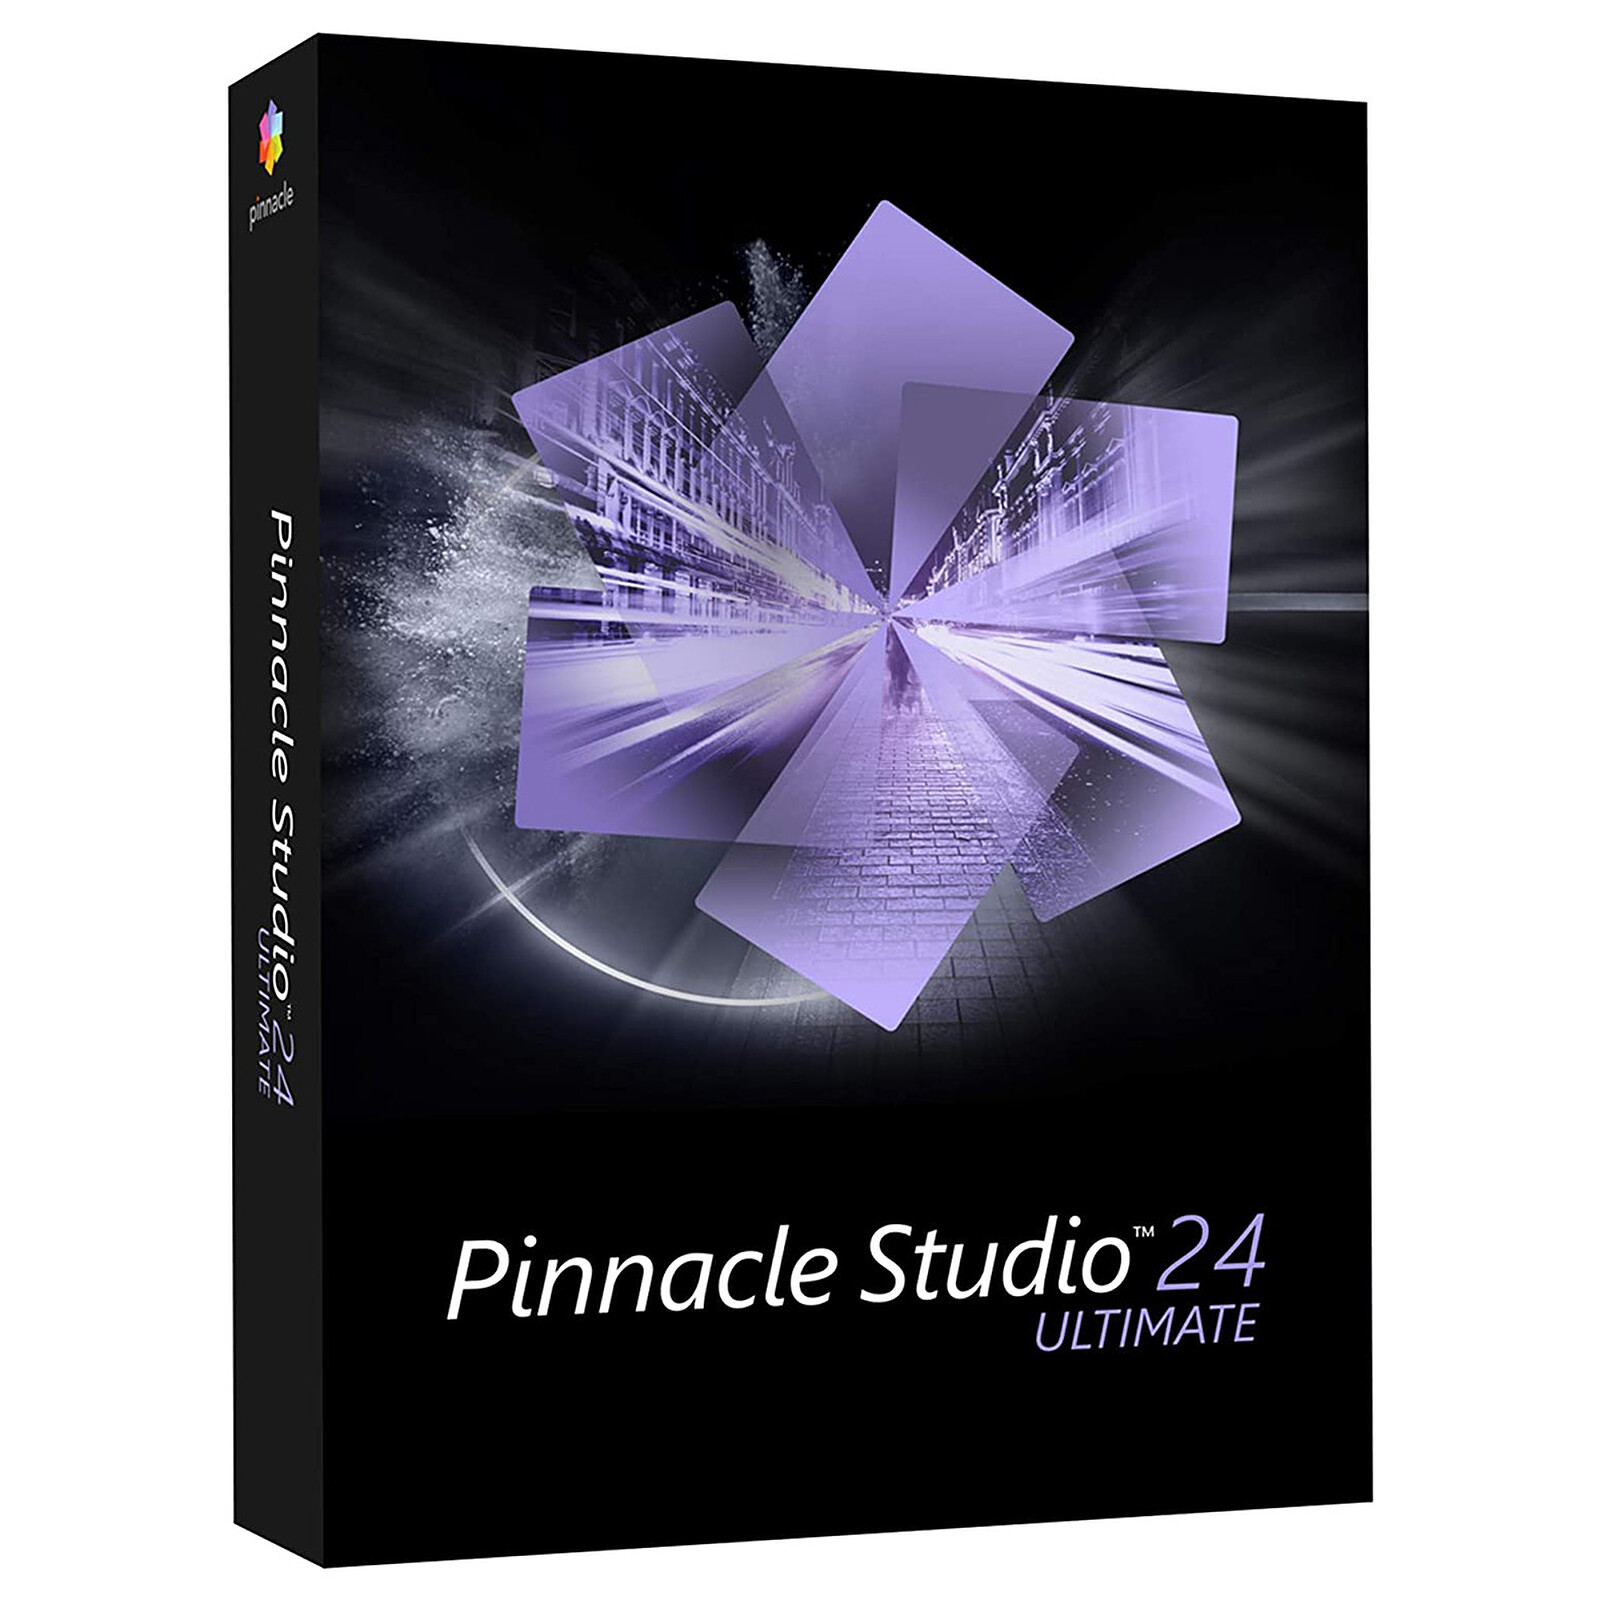 pinnacle studio 17 transitions